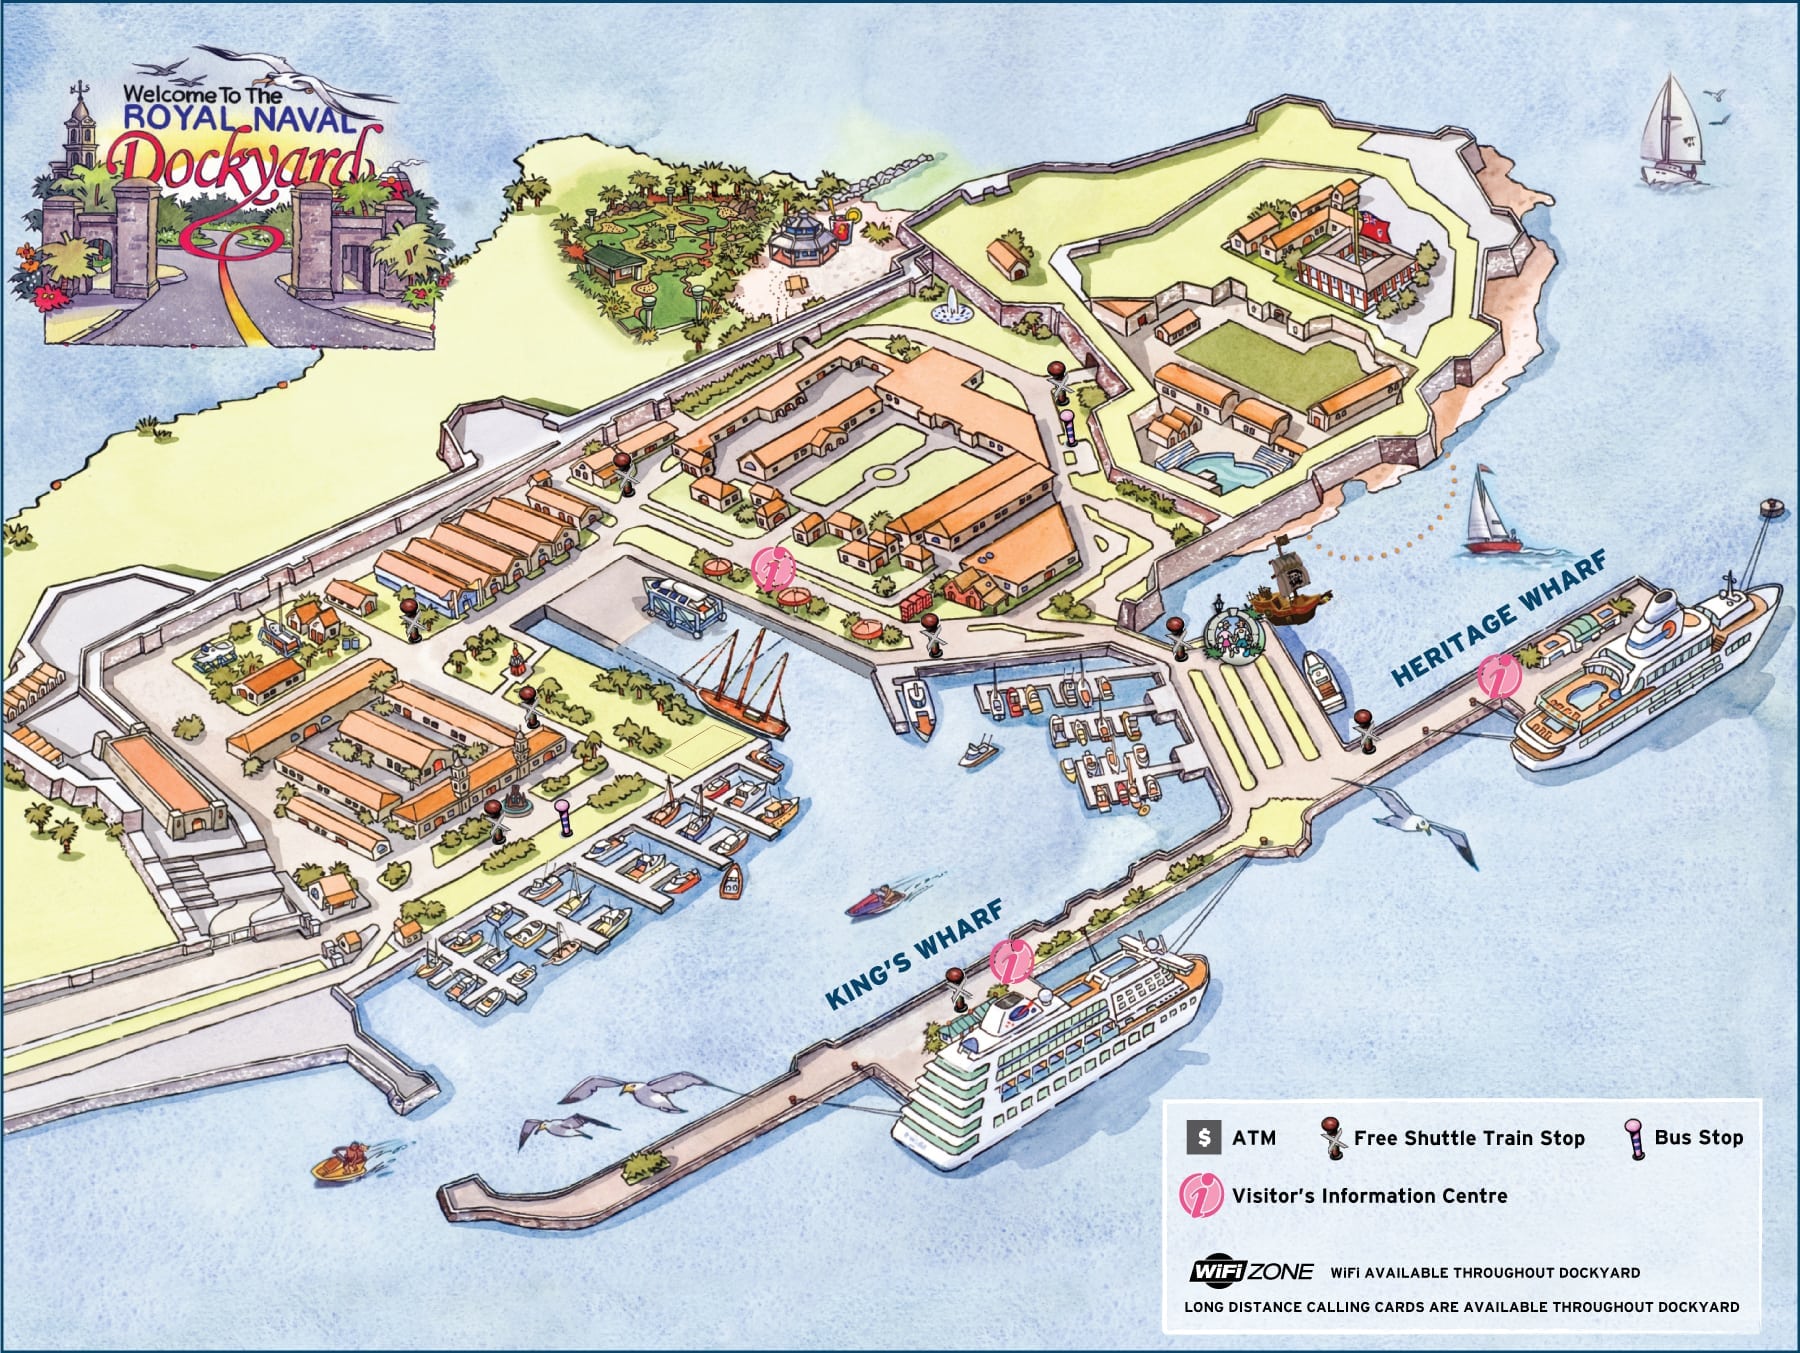 map of bermuda cruise port